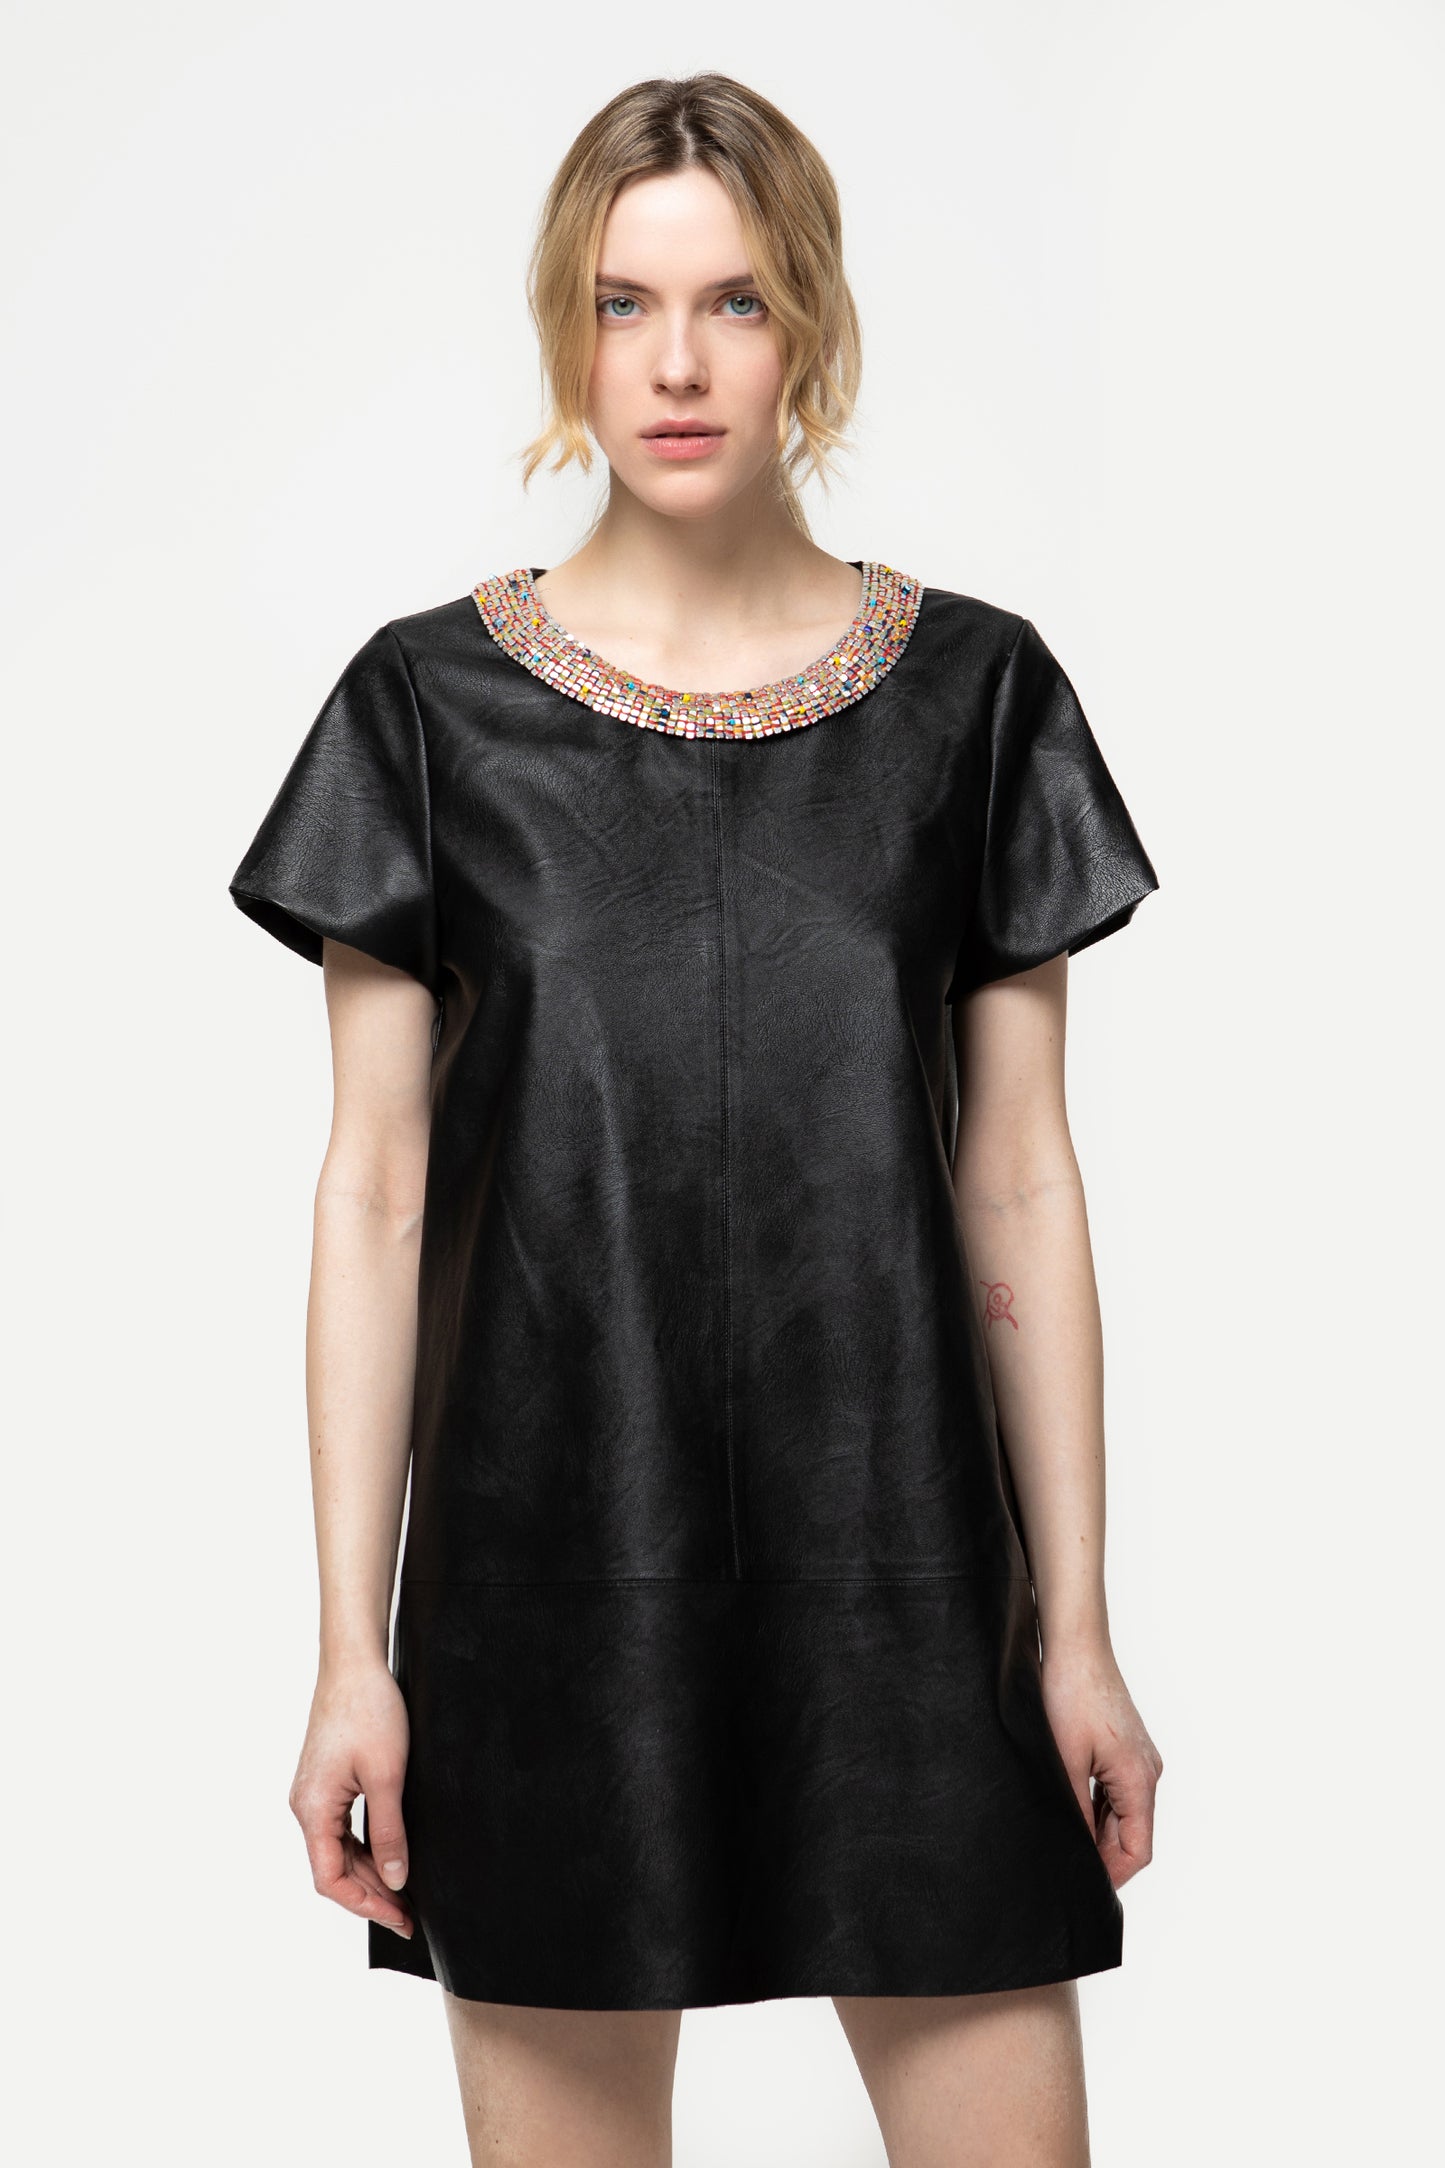 SARAH - Eco - leather mini dress with jewel neckline